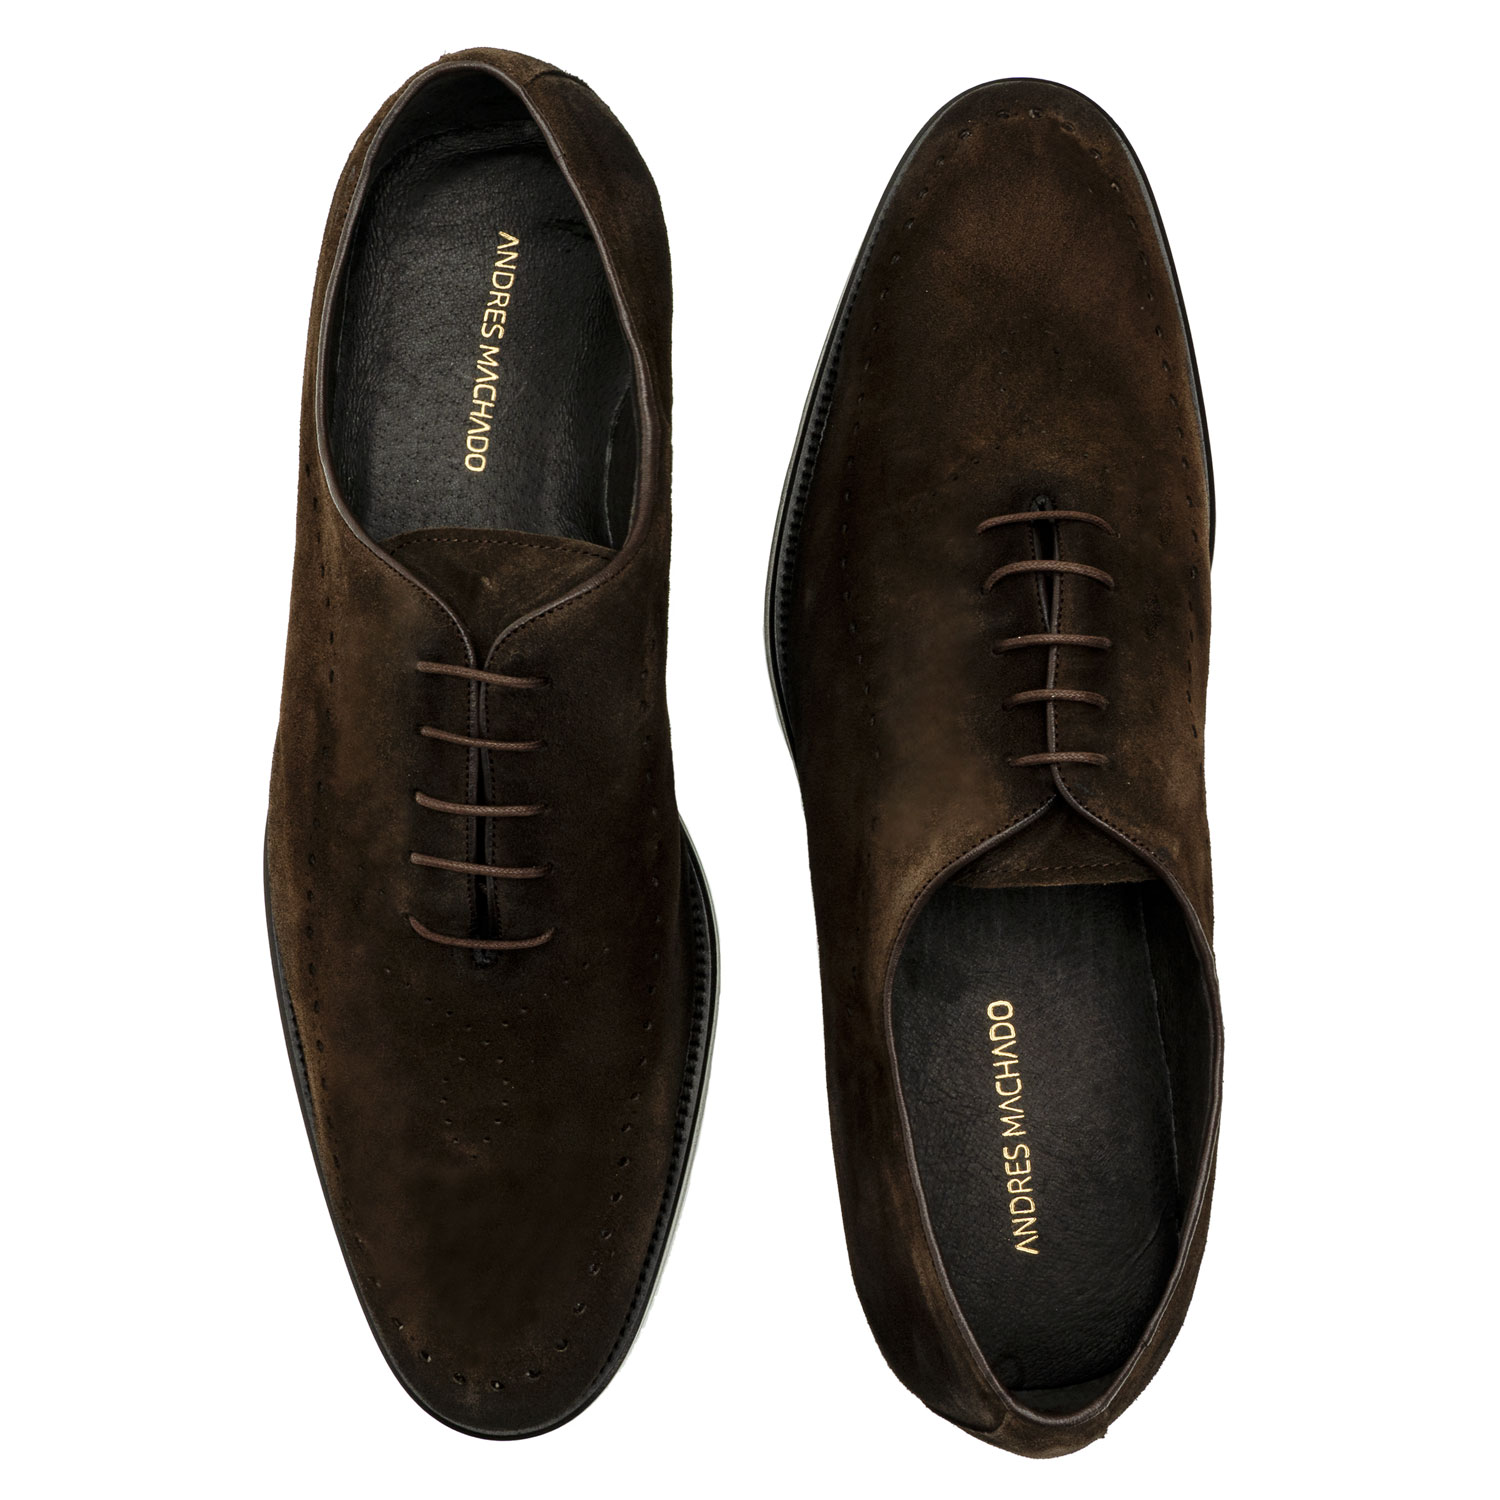 Men's Dress Shoes in Brown Split Leather 